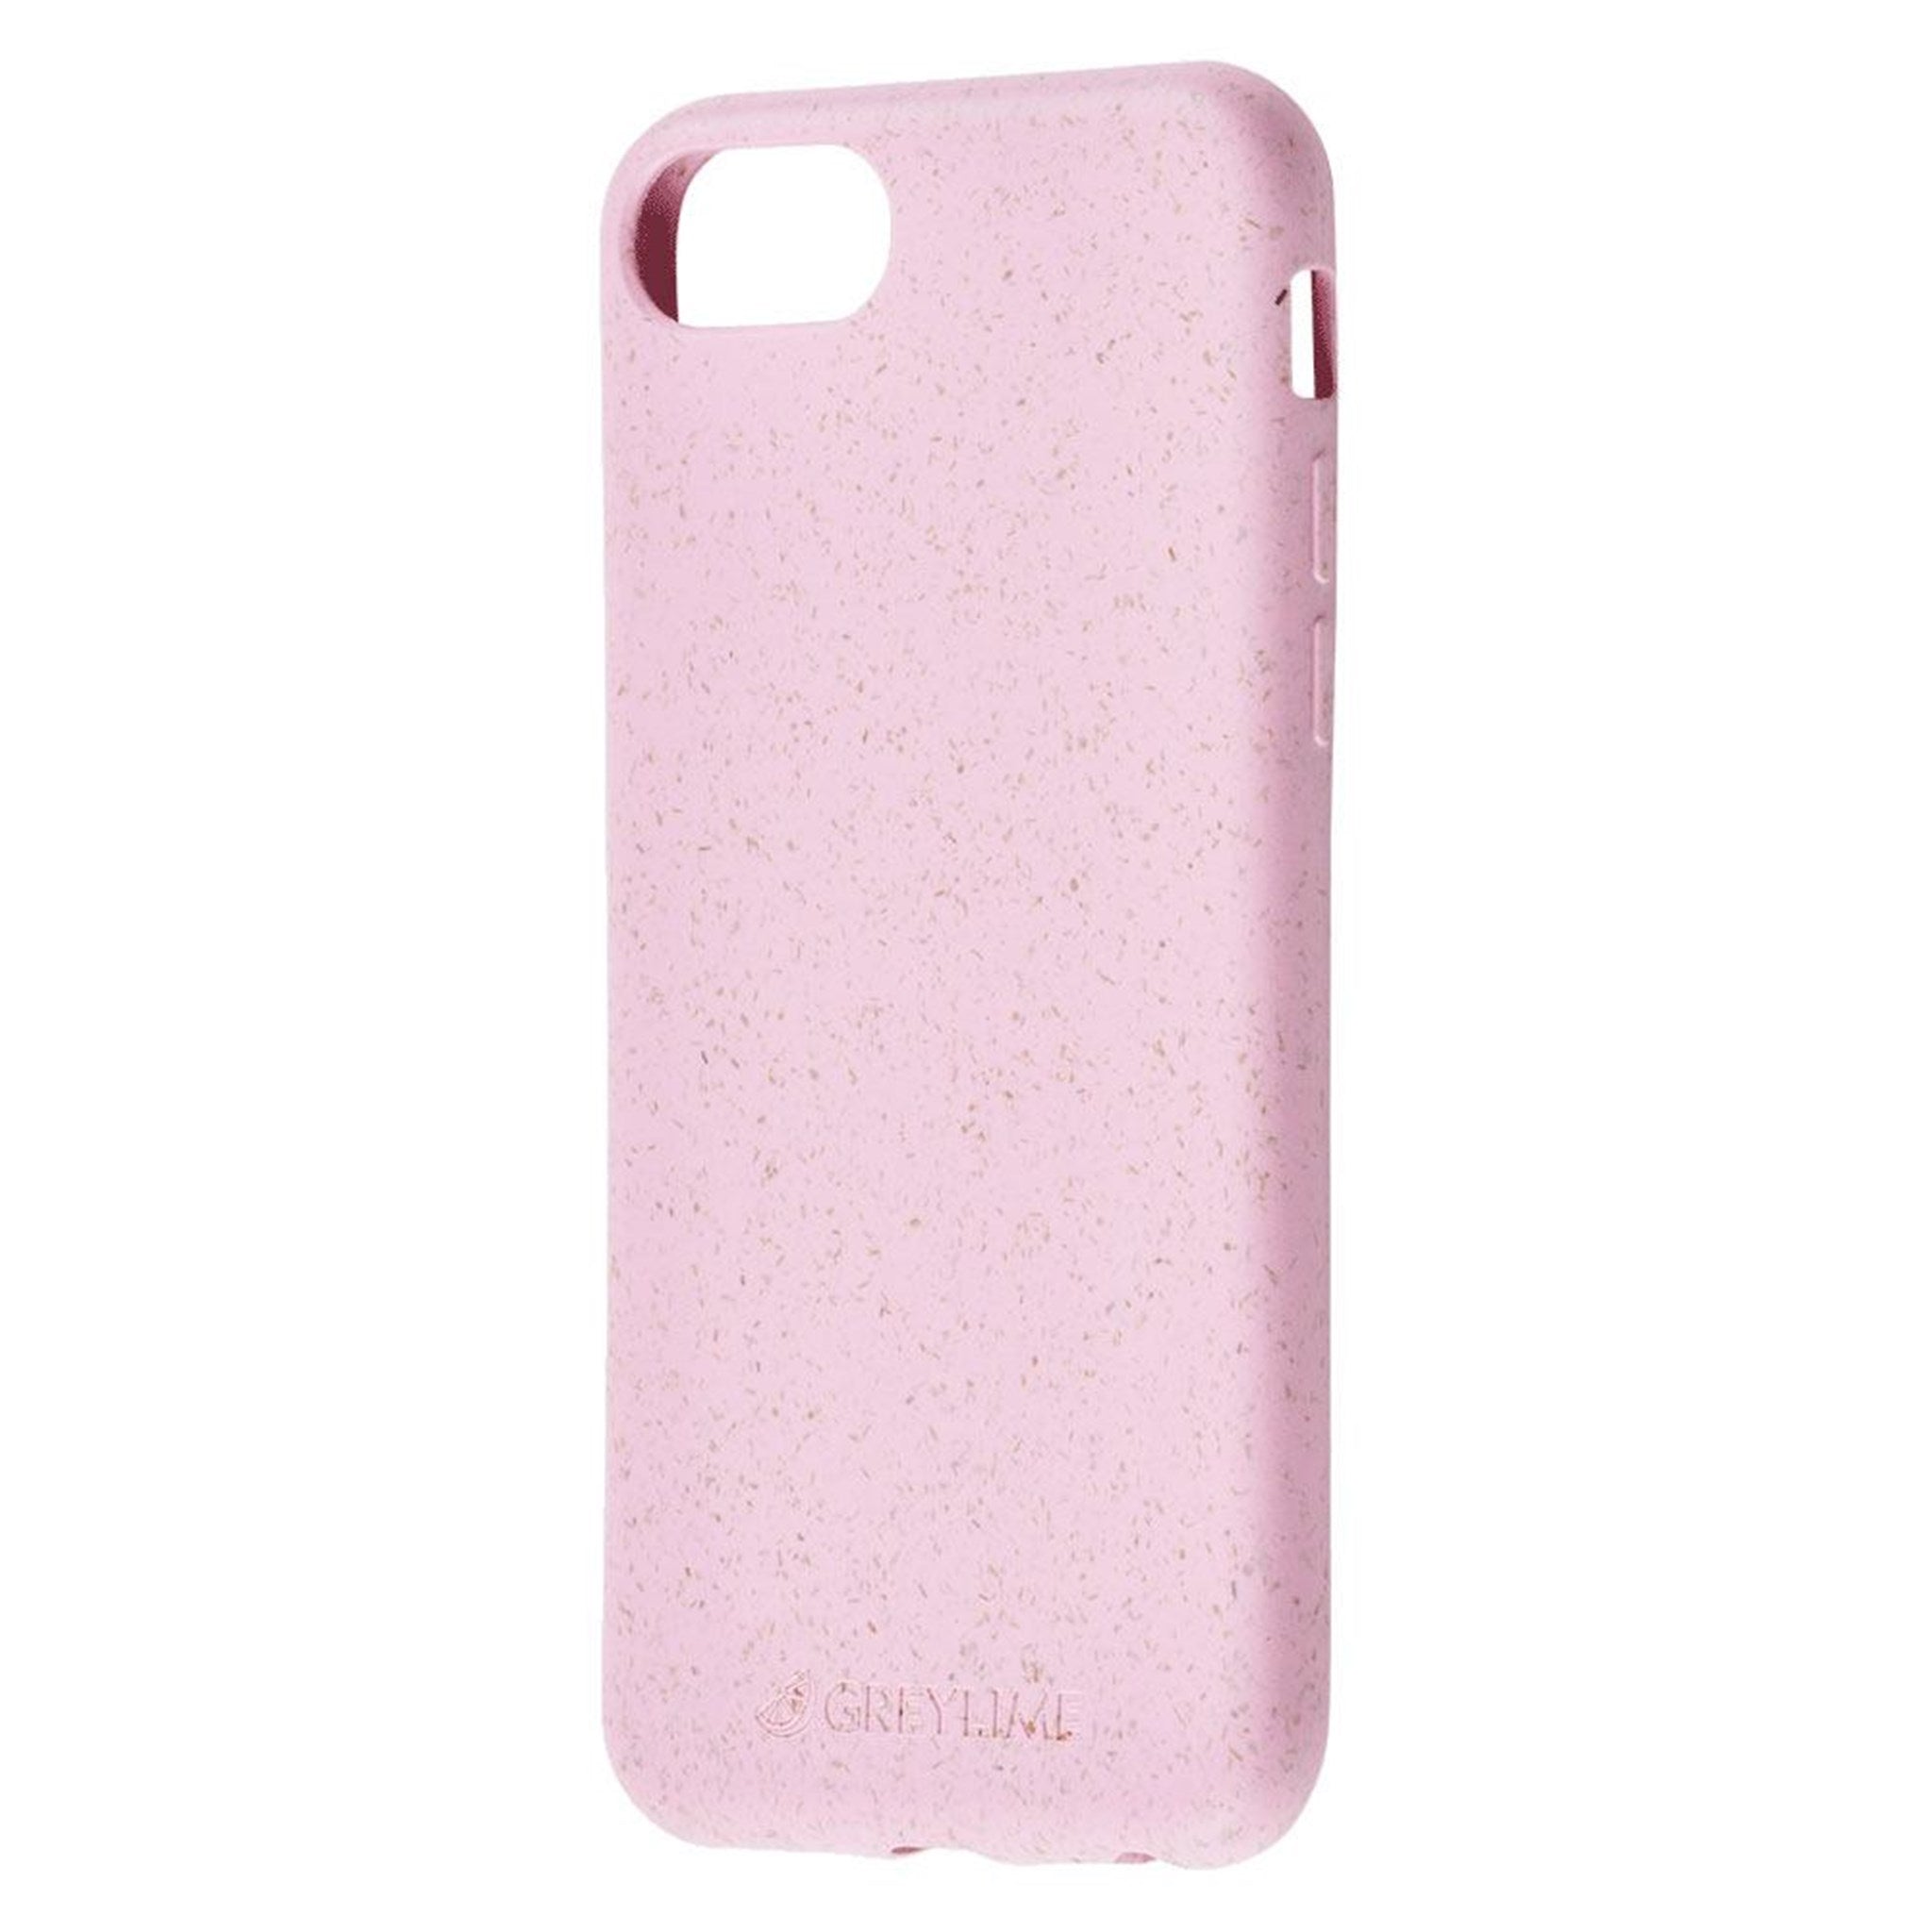 GreyLime-iPhone-6-7-8-SE-biodegradable-cover-Pink-COIP67805-V2.jpg